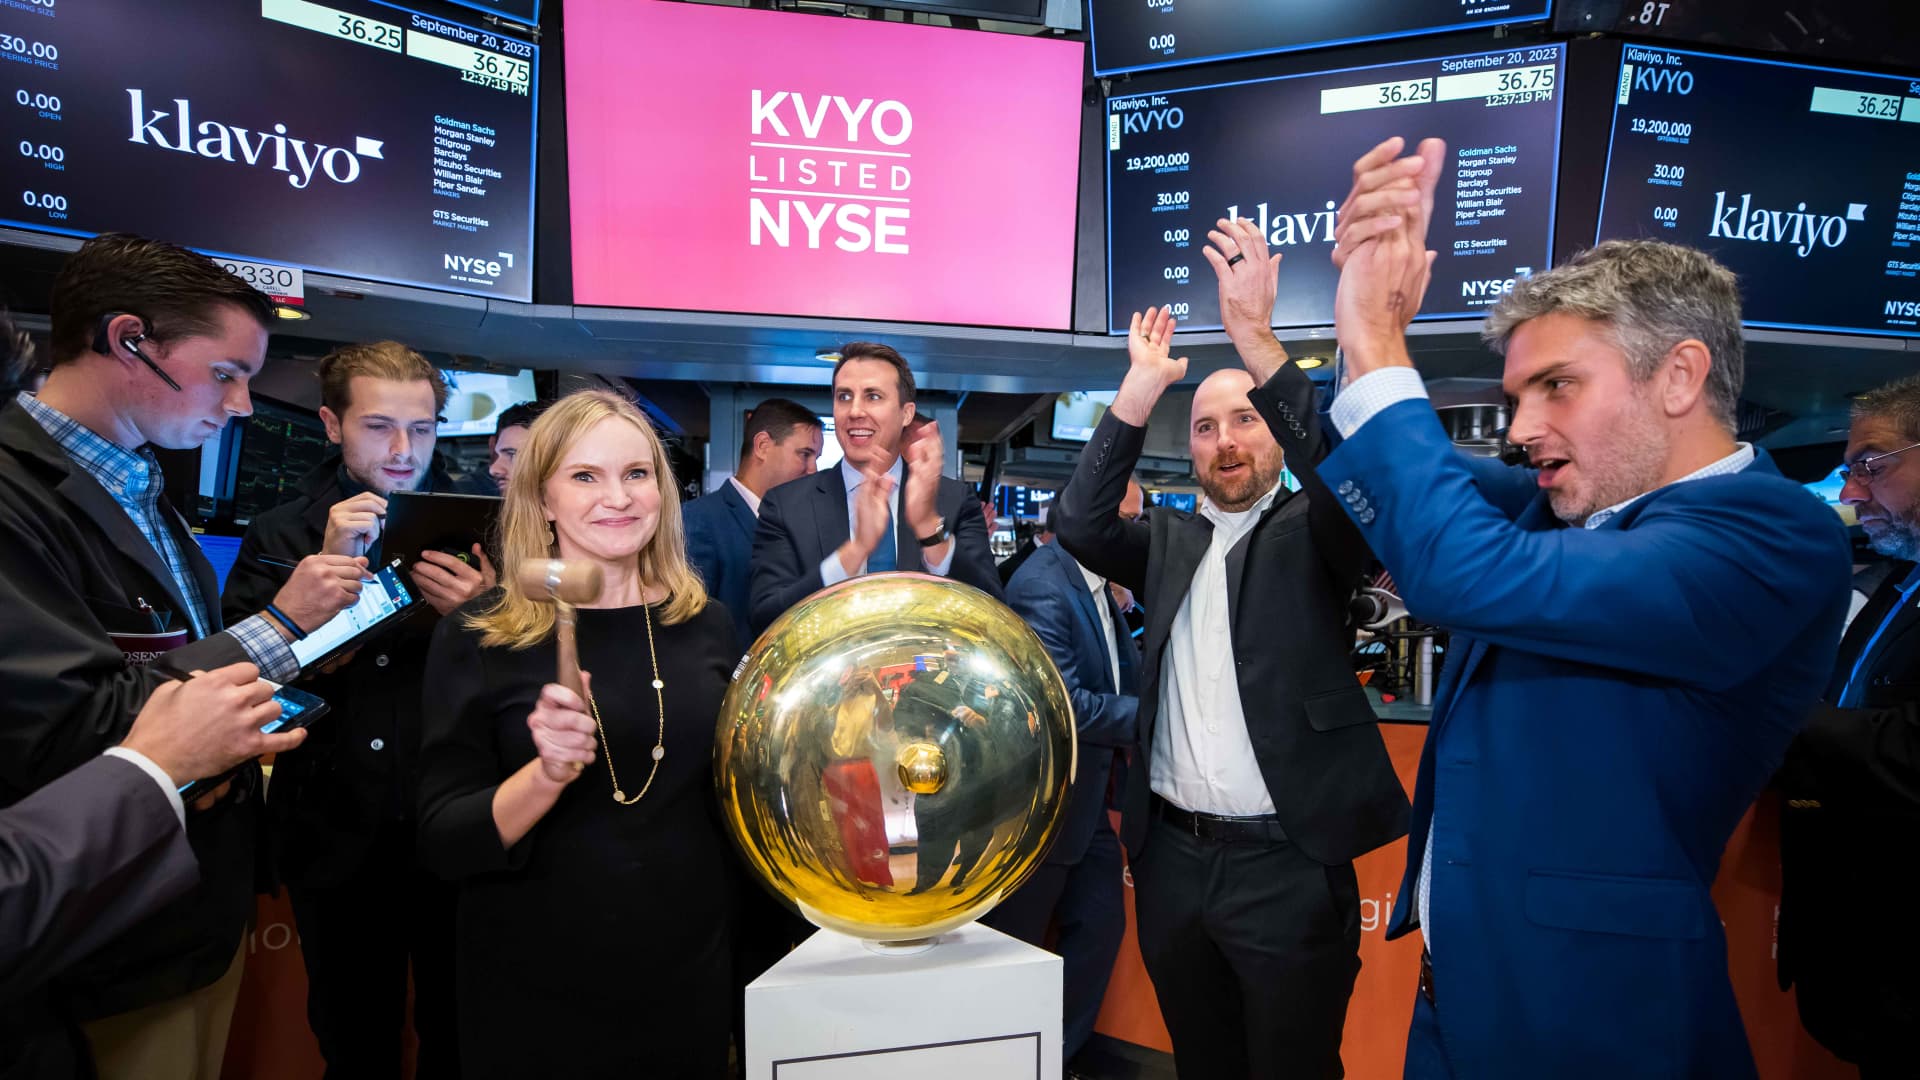 Klaviyo rises 9% in debut after software vendor priced IPO at $30